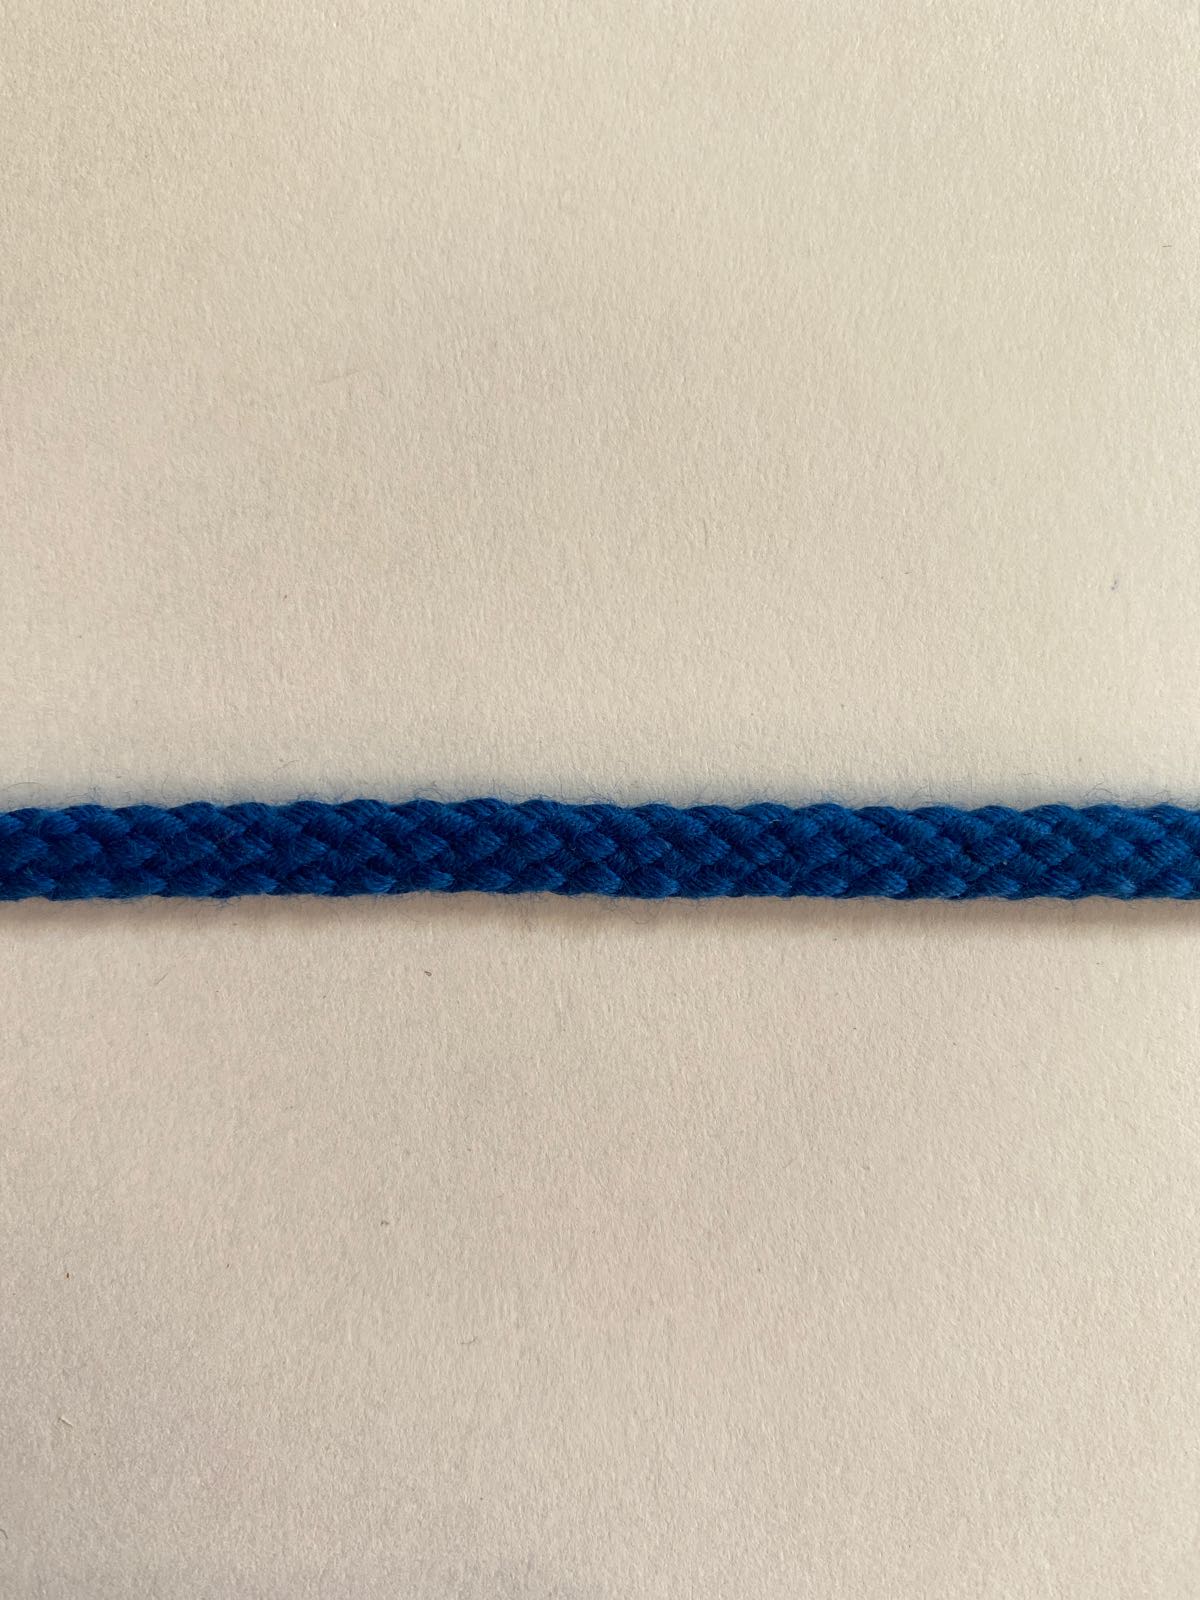 Flat anorak cord 5 mm